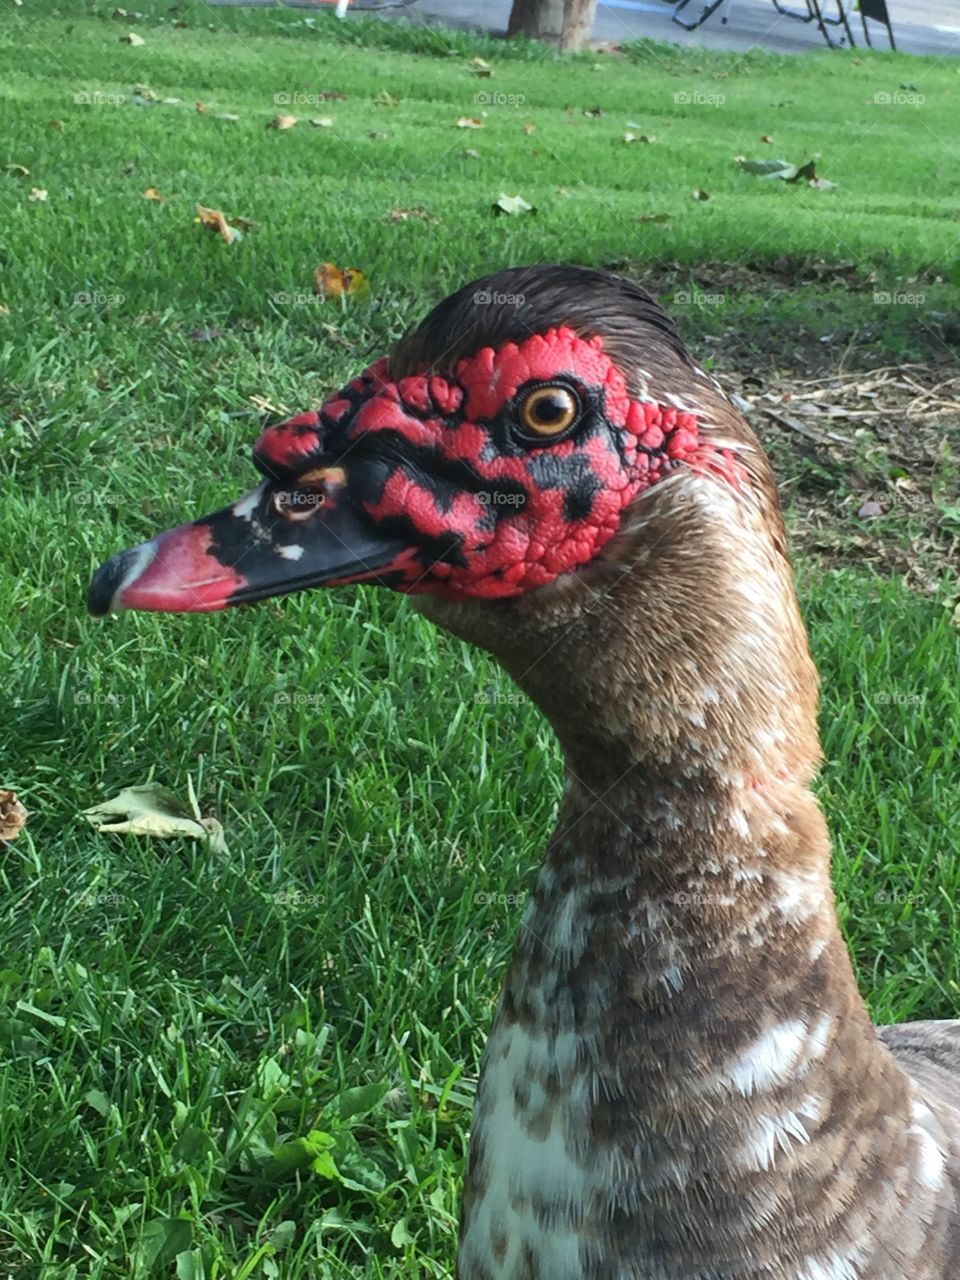 Cool looking duck 